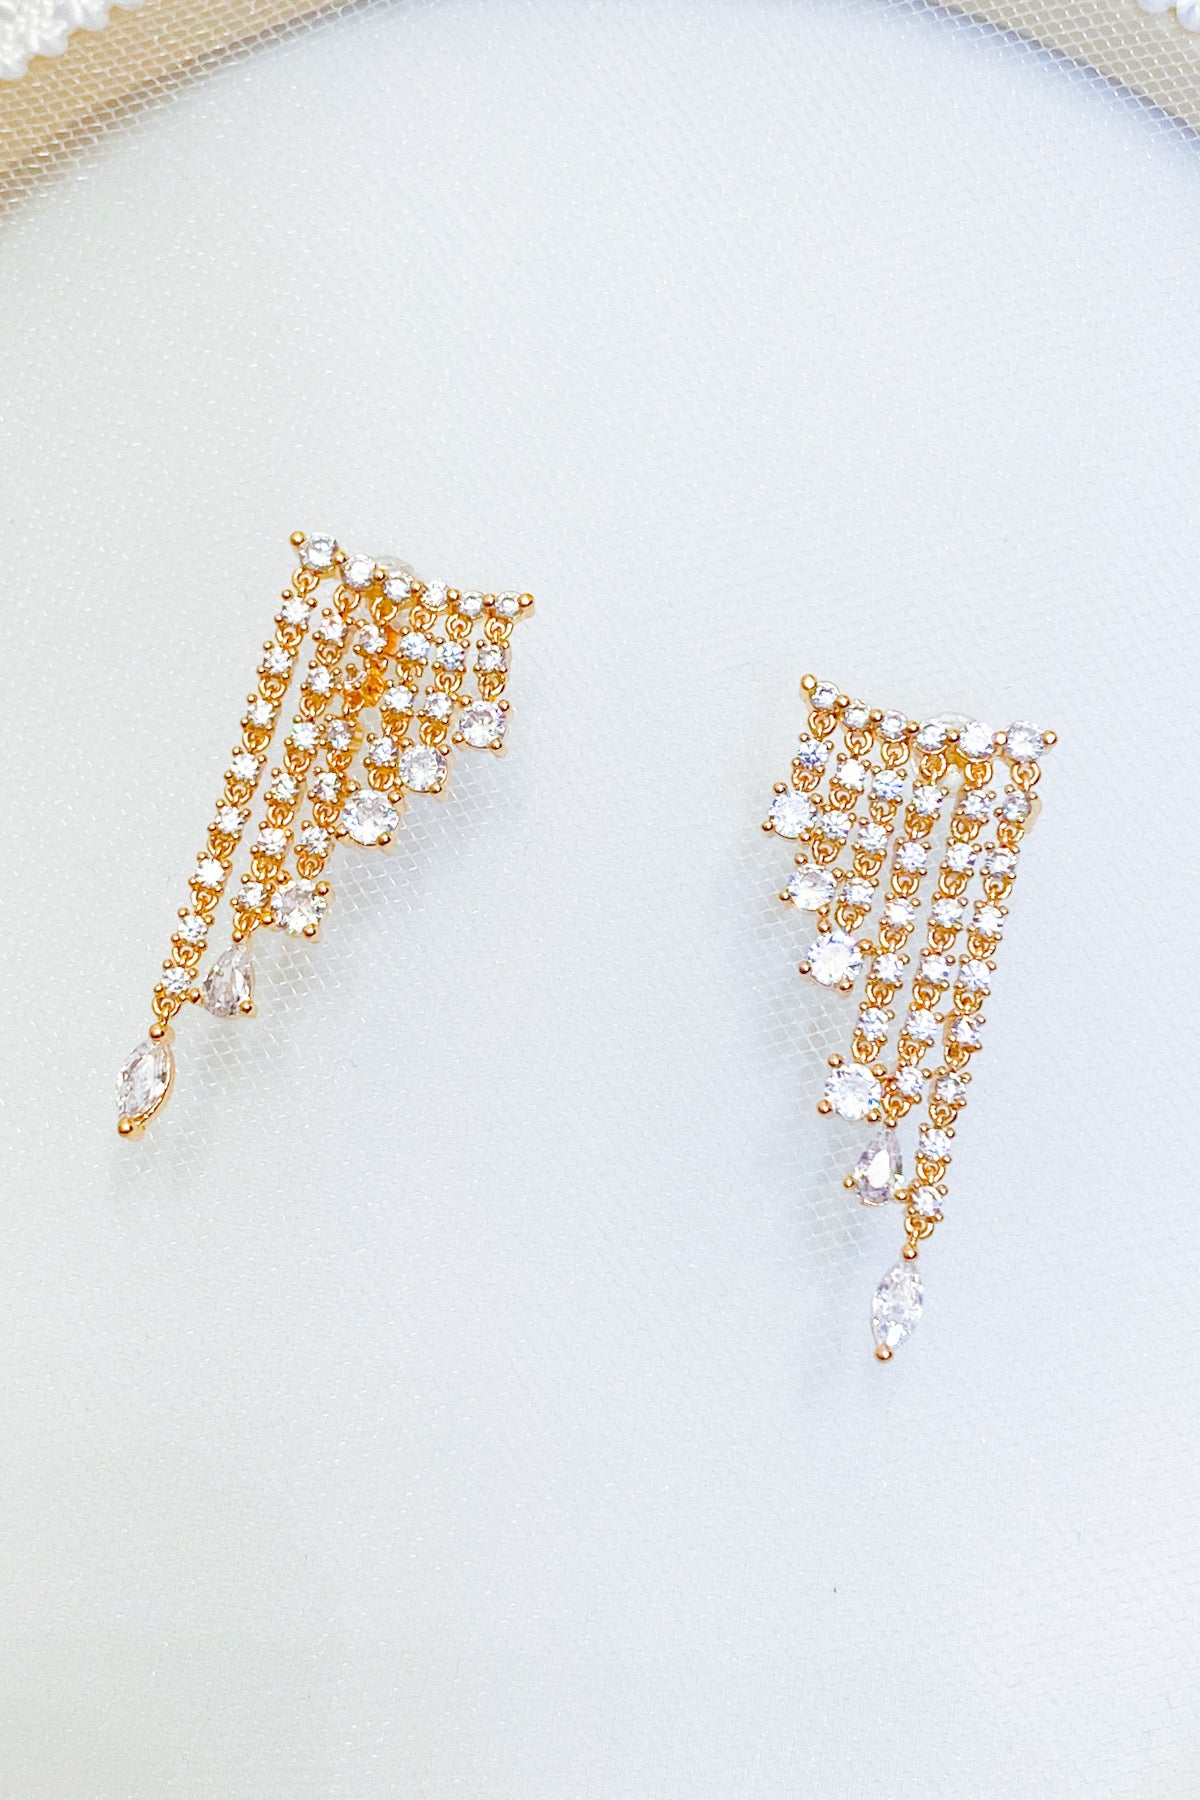 SKYE San Francisco Shop Chic Modern Elegant Classy Women Jewelry French Parisian Minimalist Nieve 18K Gold Crystal Drop Earrings